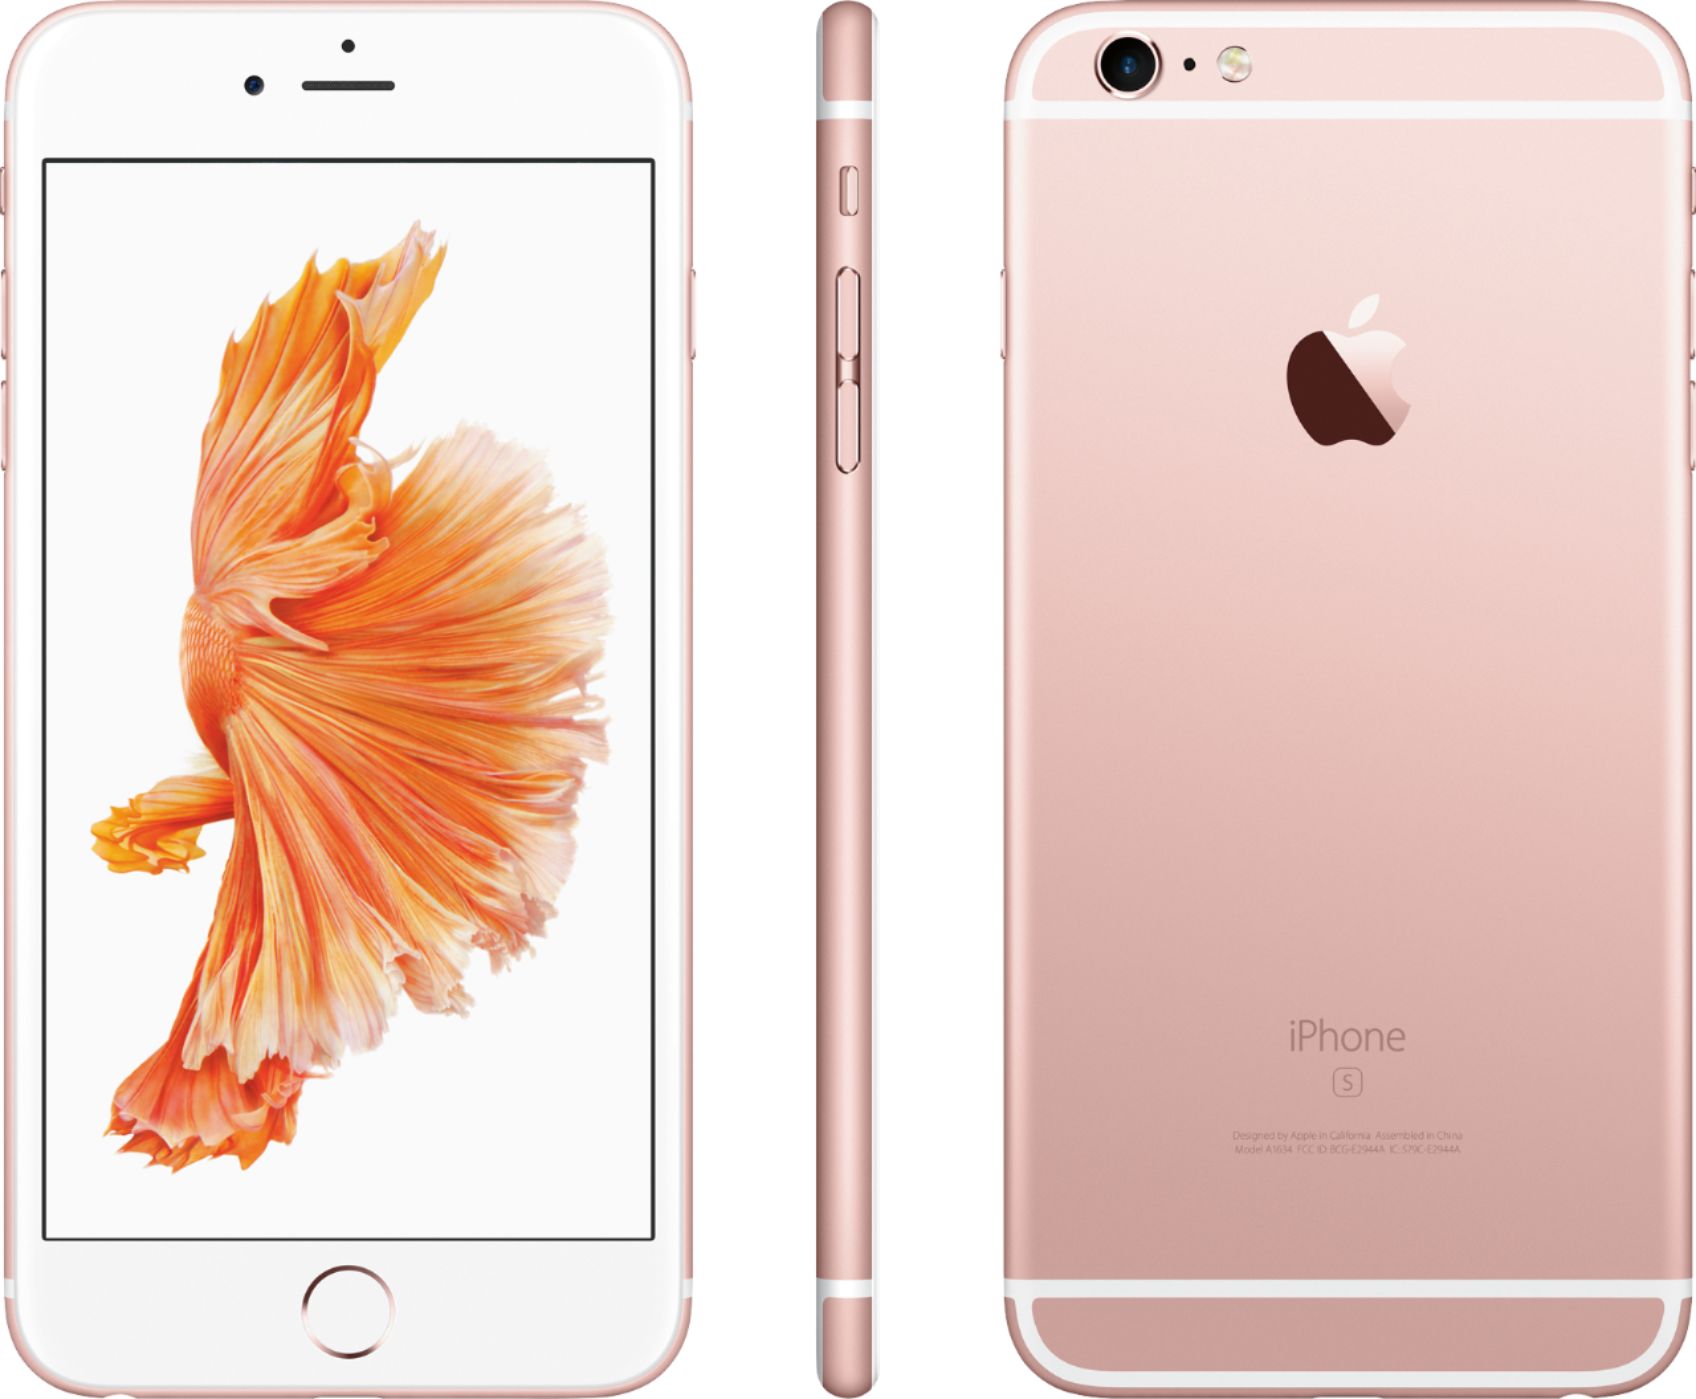 Apple iPhone 6s 32GB Rose Gold… | ochge.org